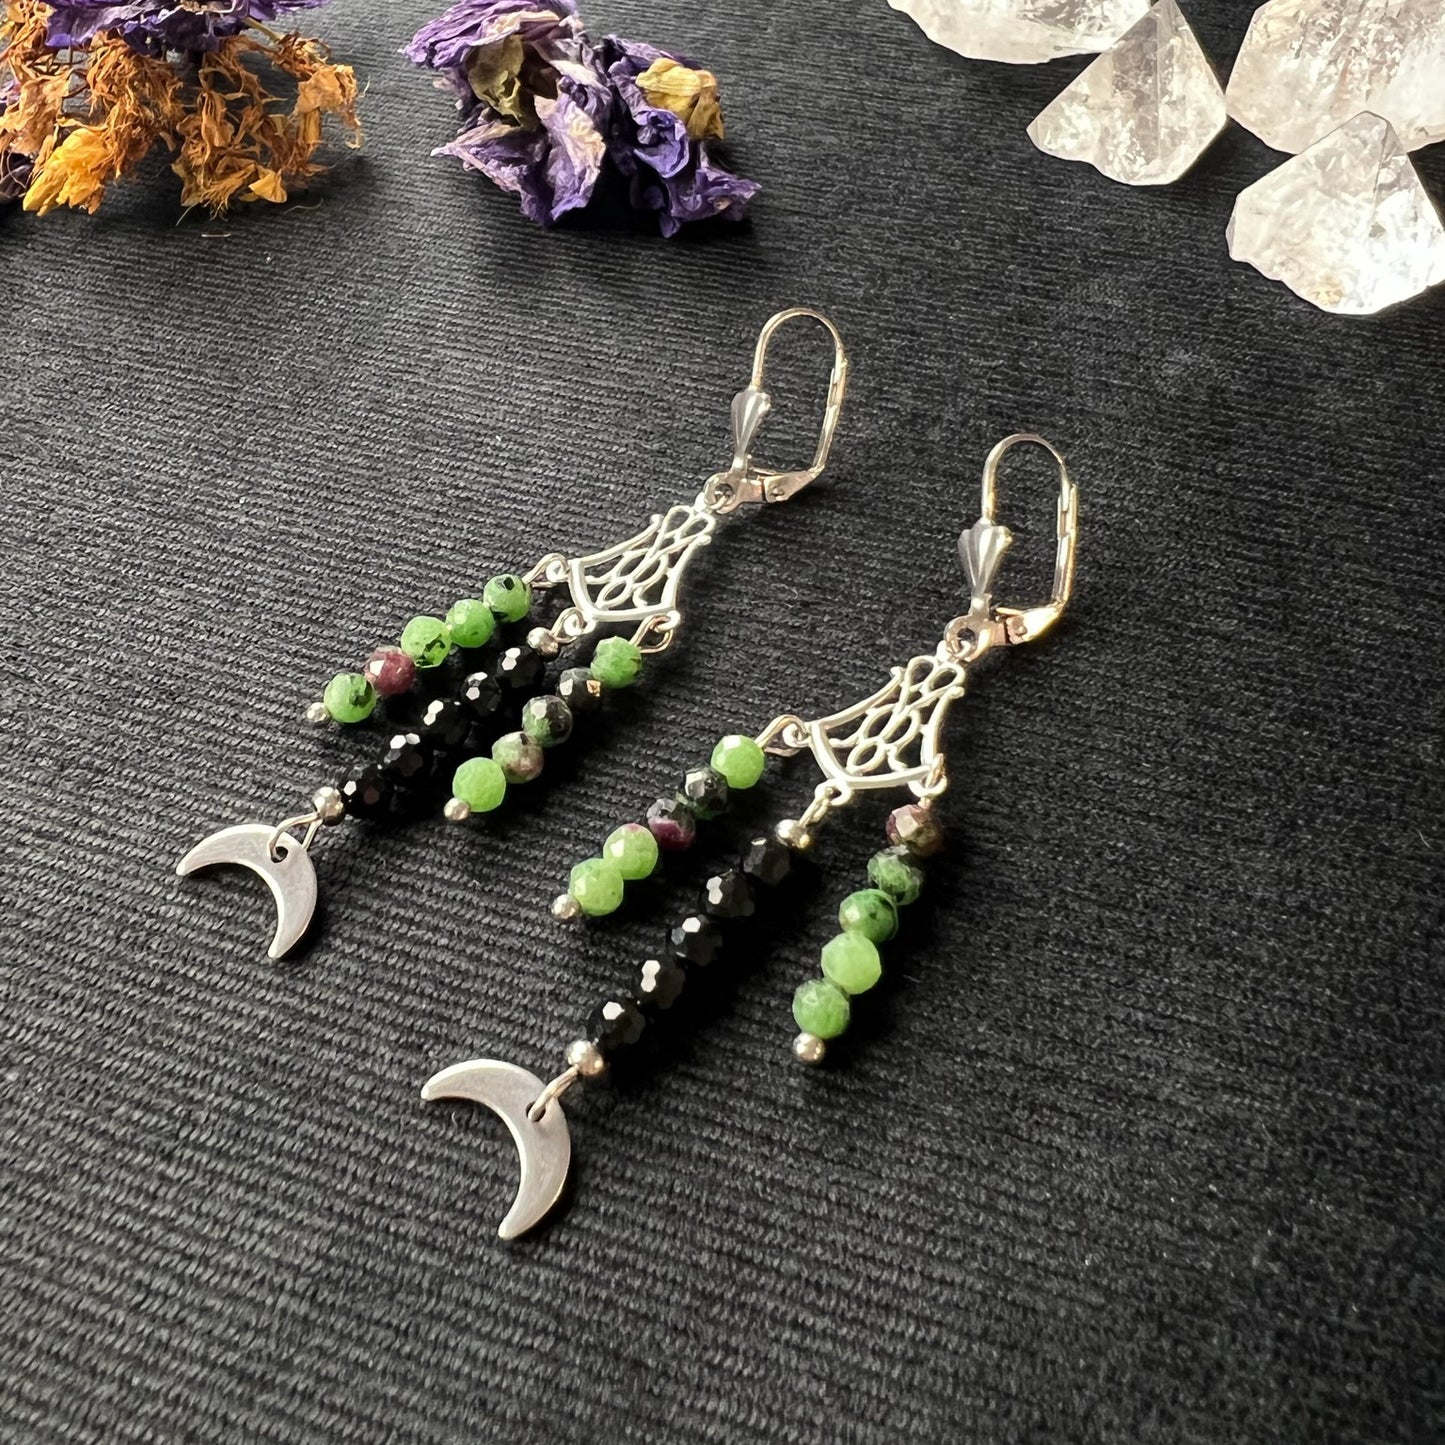 Chandelier art deco earrings Onyx/Garnet or Onyx/Ruby Zoisite and stainless steel Baguette Magick